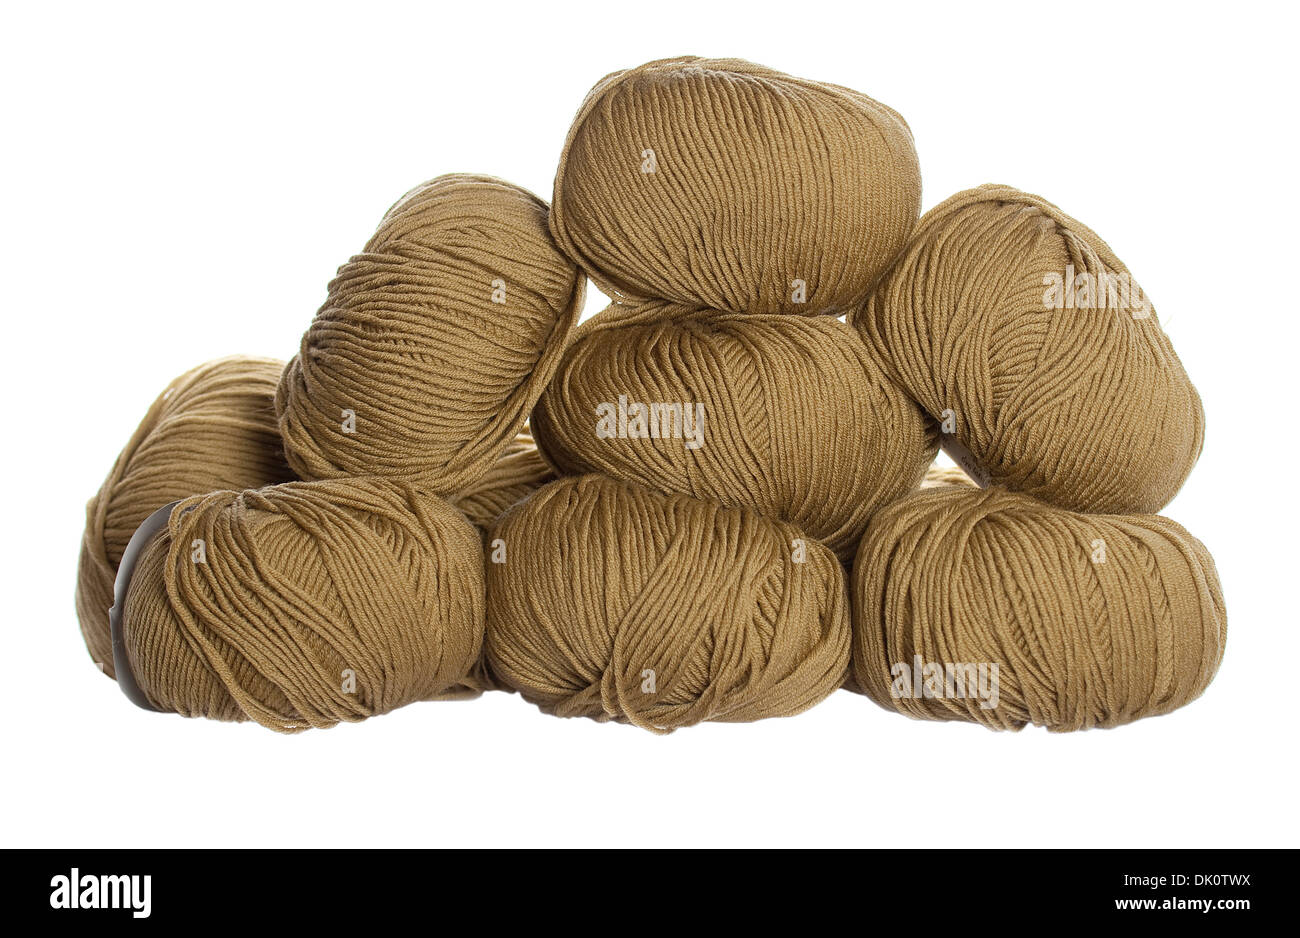 khaki coloured balls of wool Stock Photo